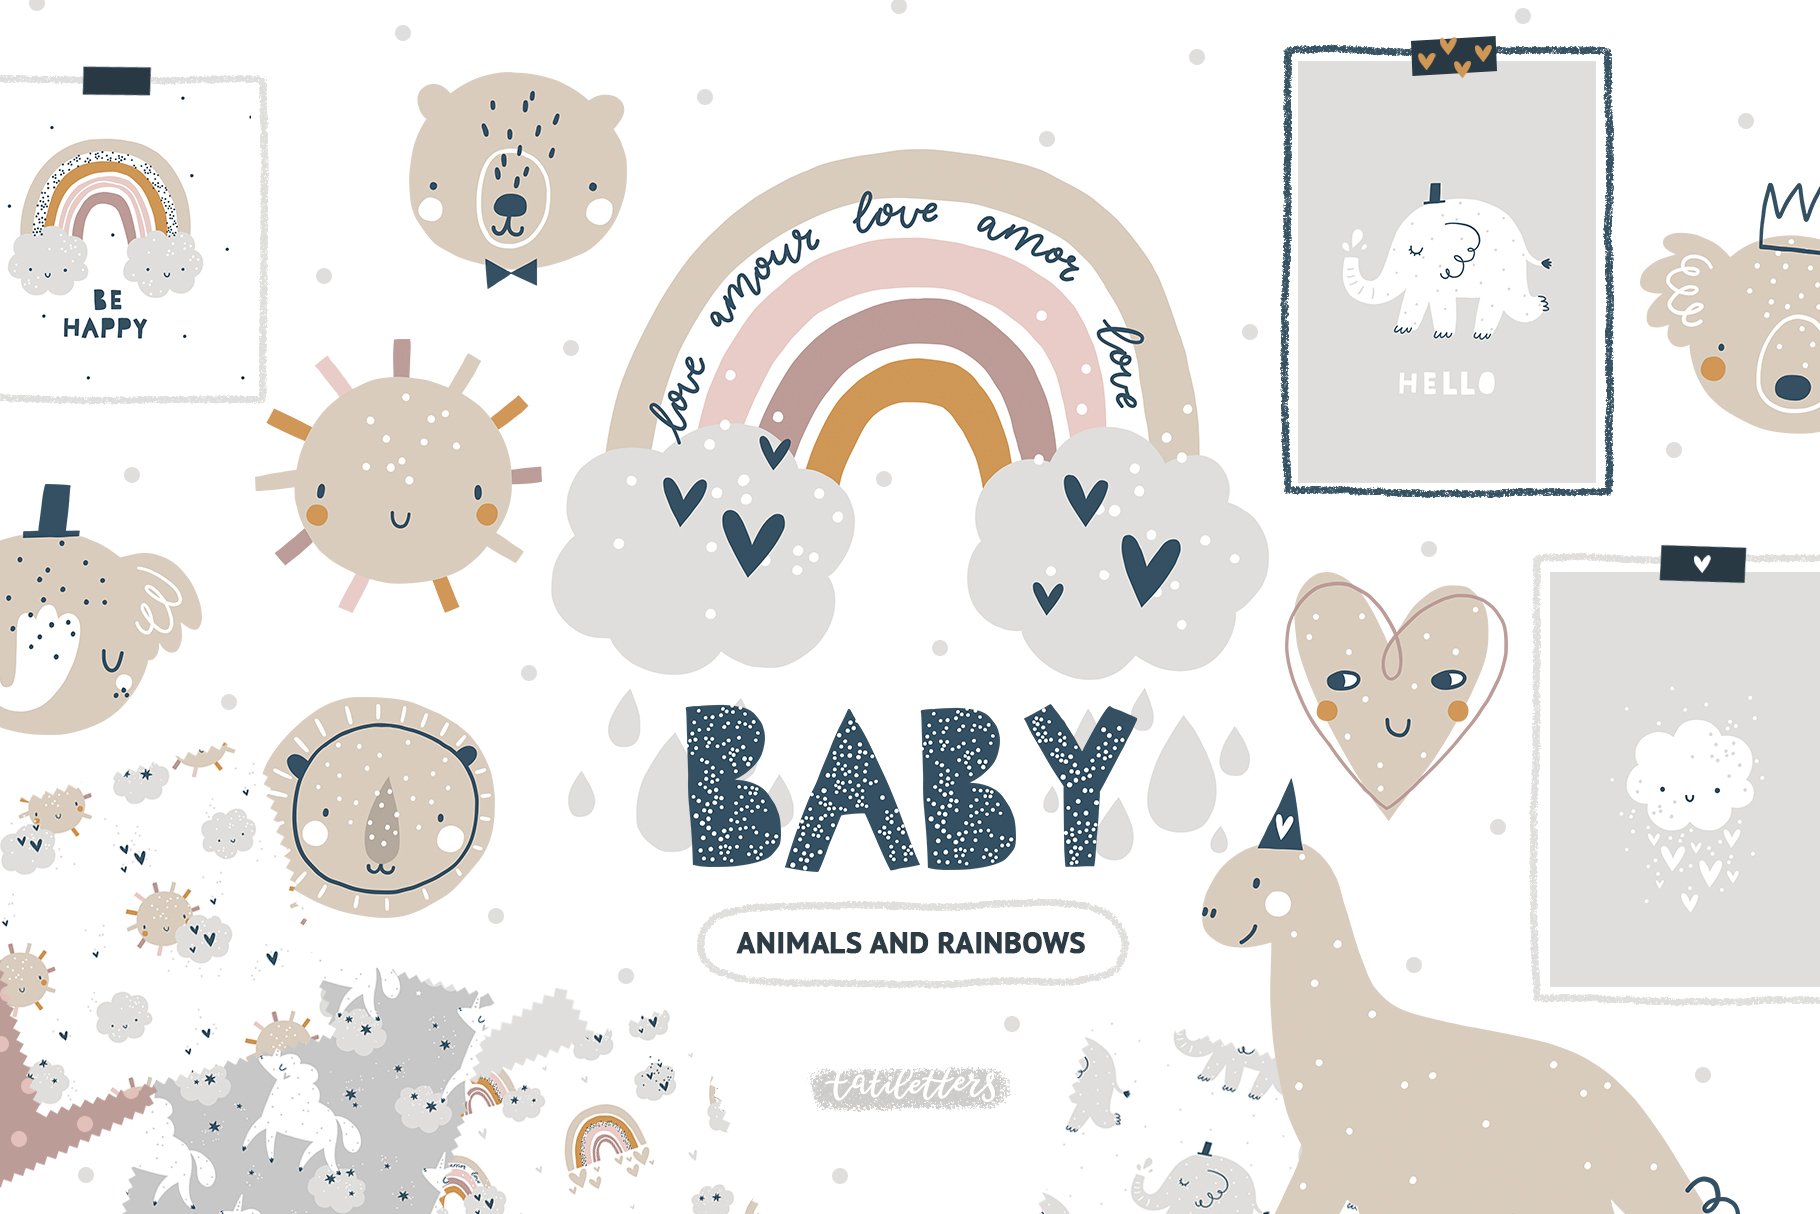 Baby Animals & Pastel Rainbows cover image.